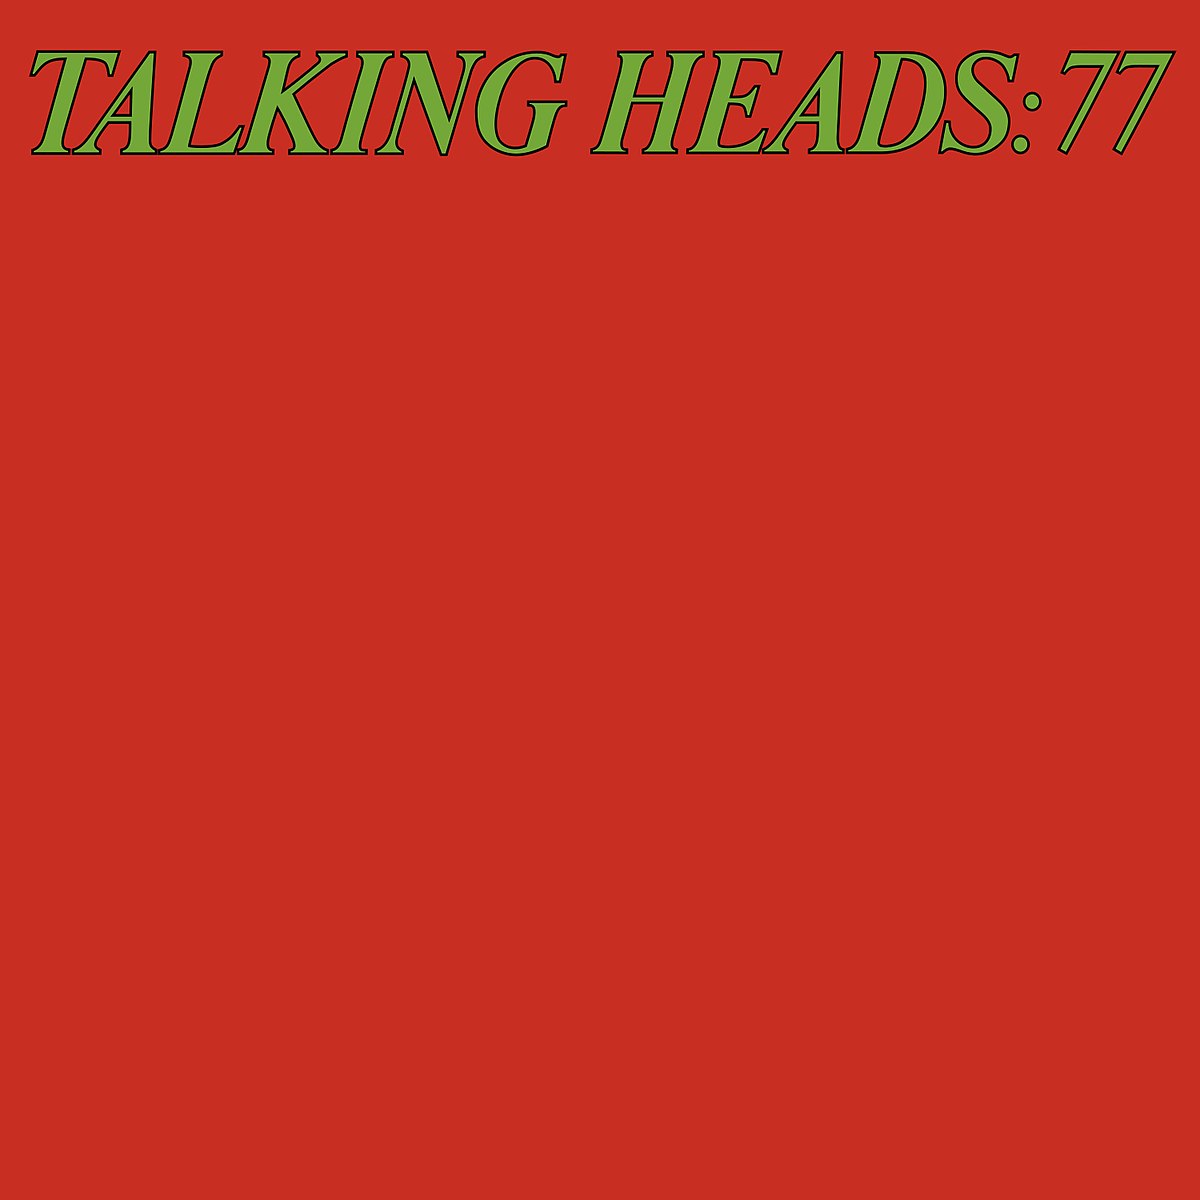 Talking Heads "77" LP